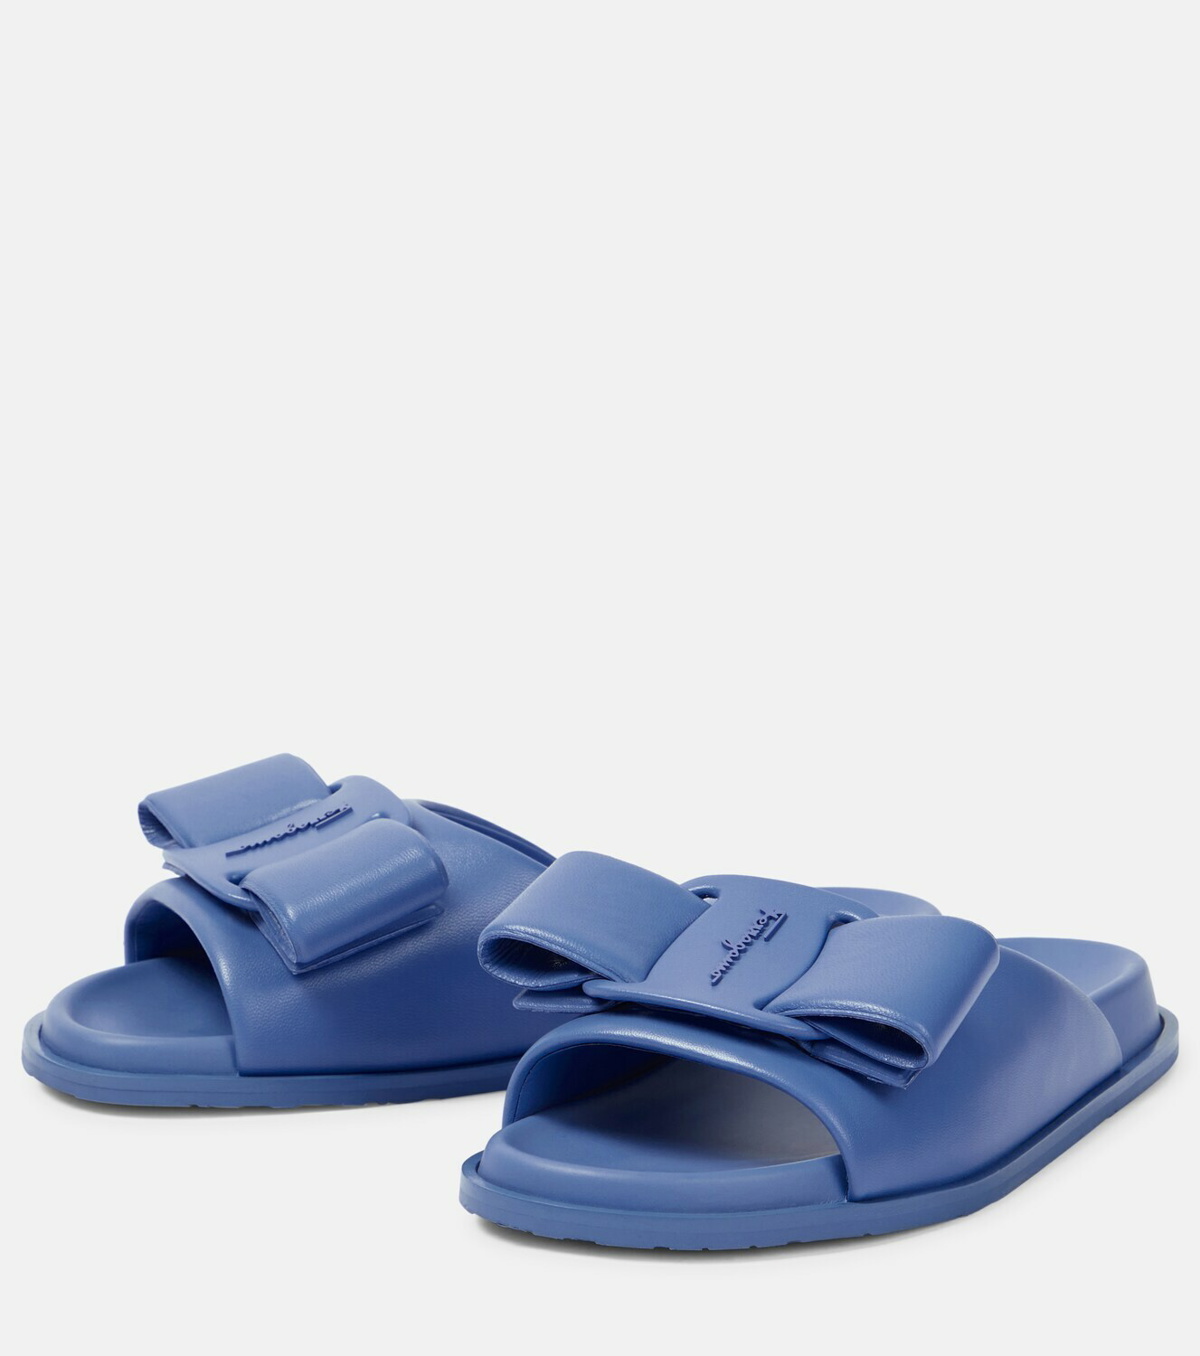 Sandals Salvatore Ferragamo Blue size 10 US in Rubber - 25253028